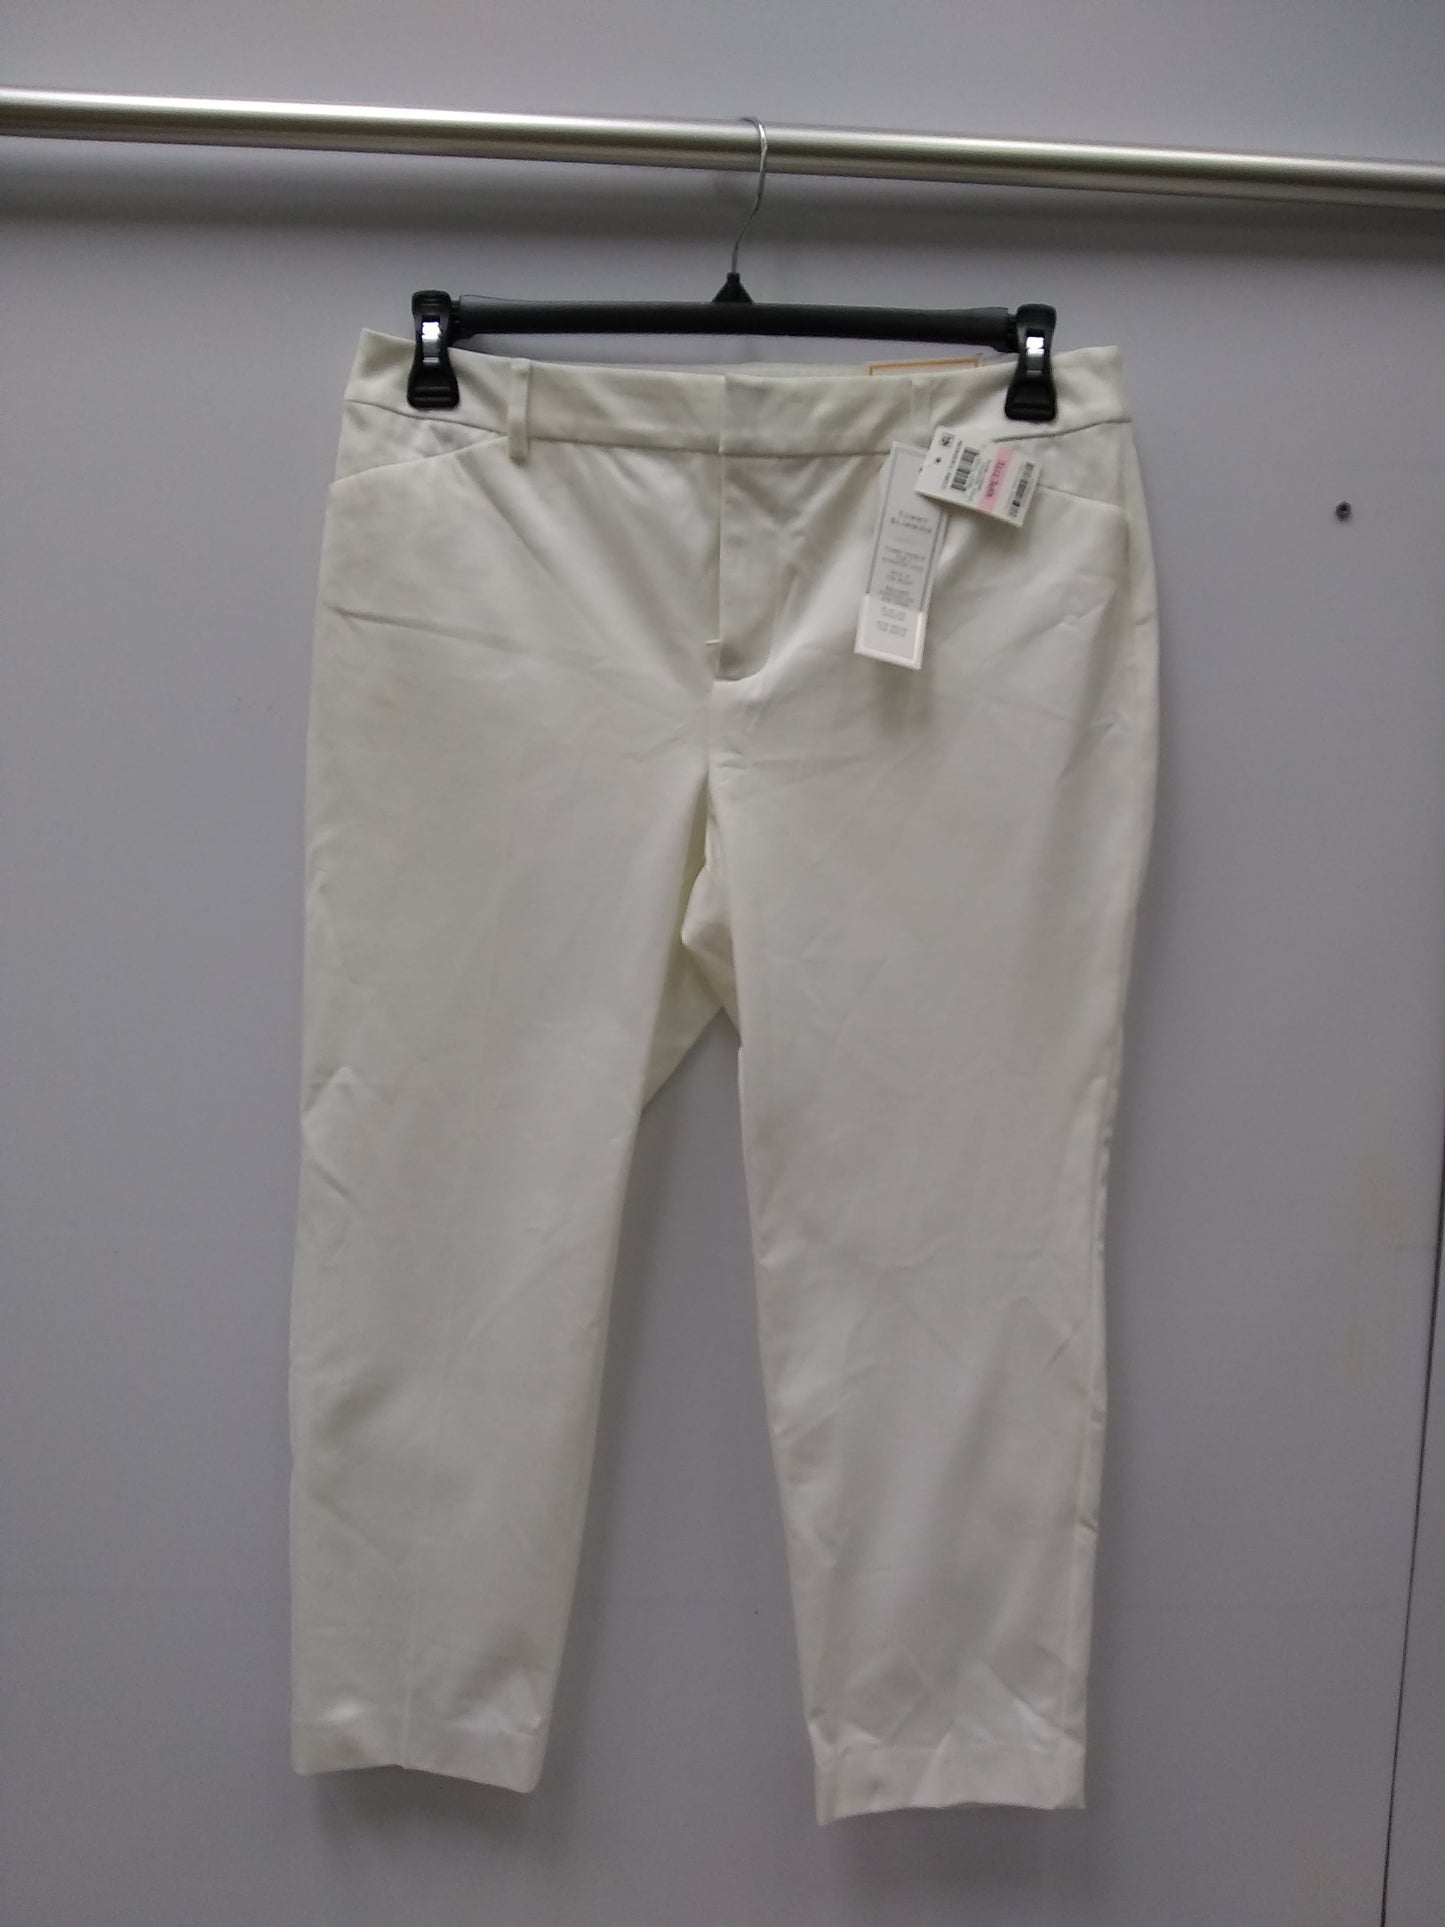 Charter Club Petite Cropped Pants Bright White 10P